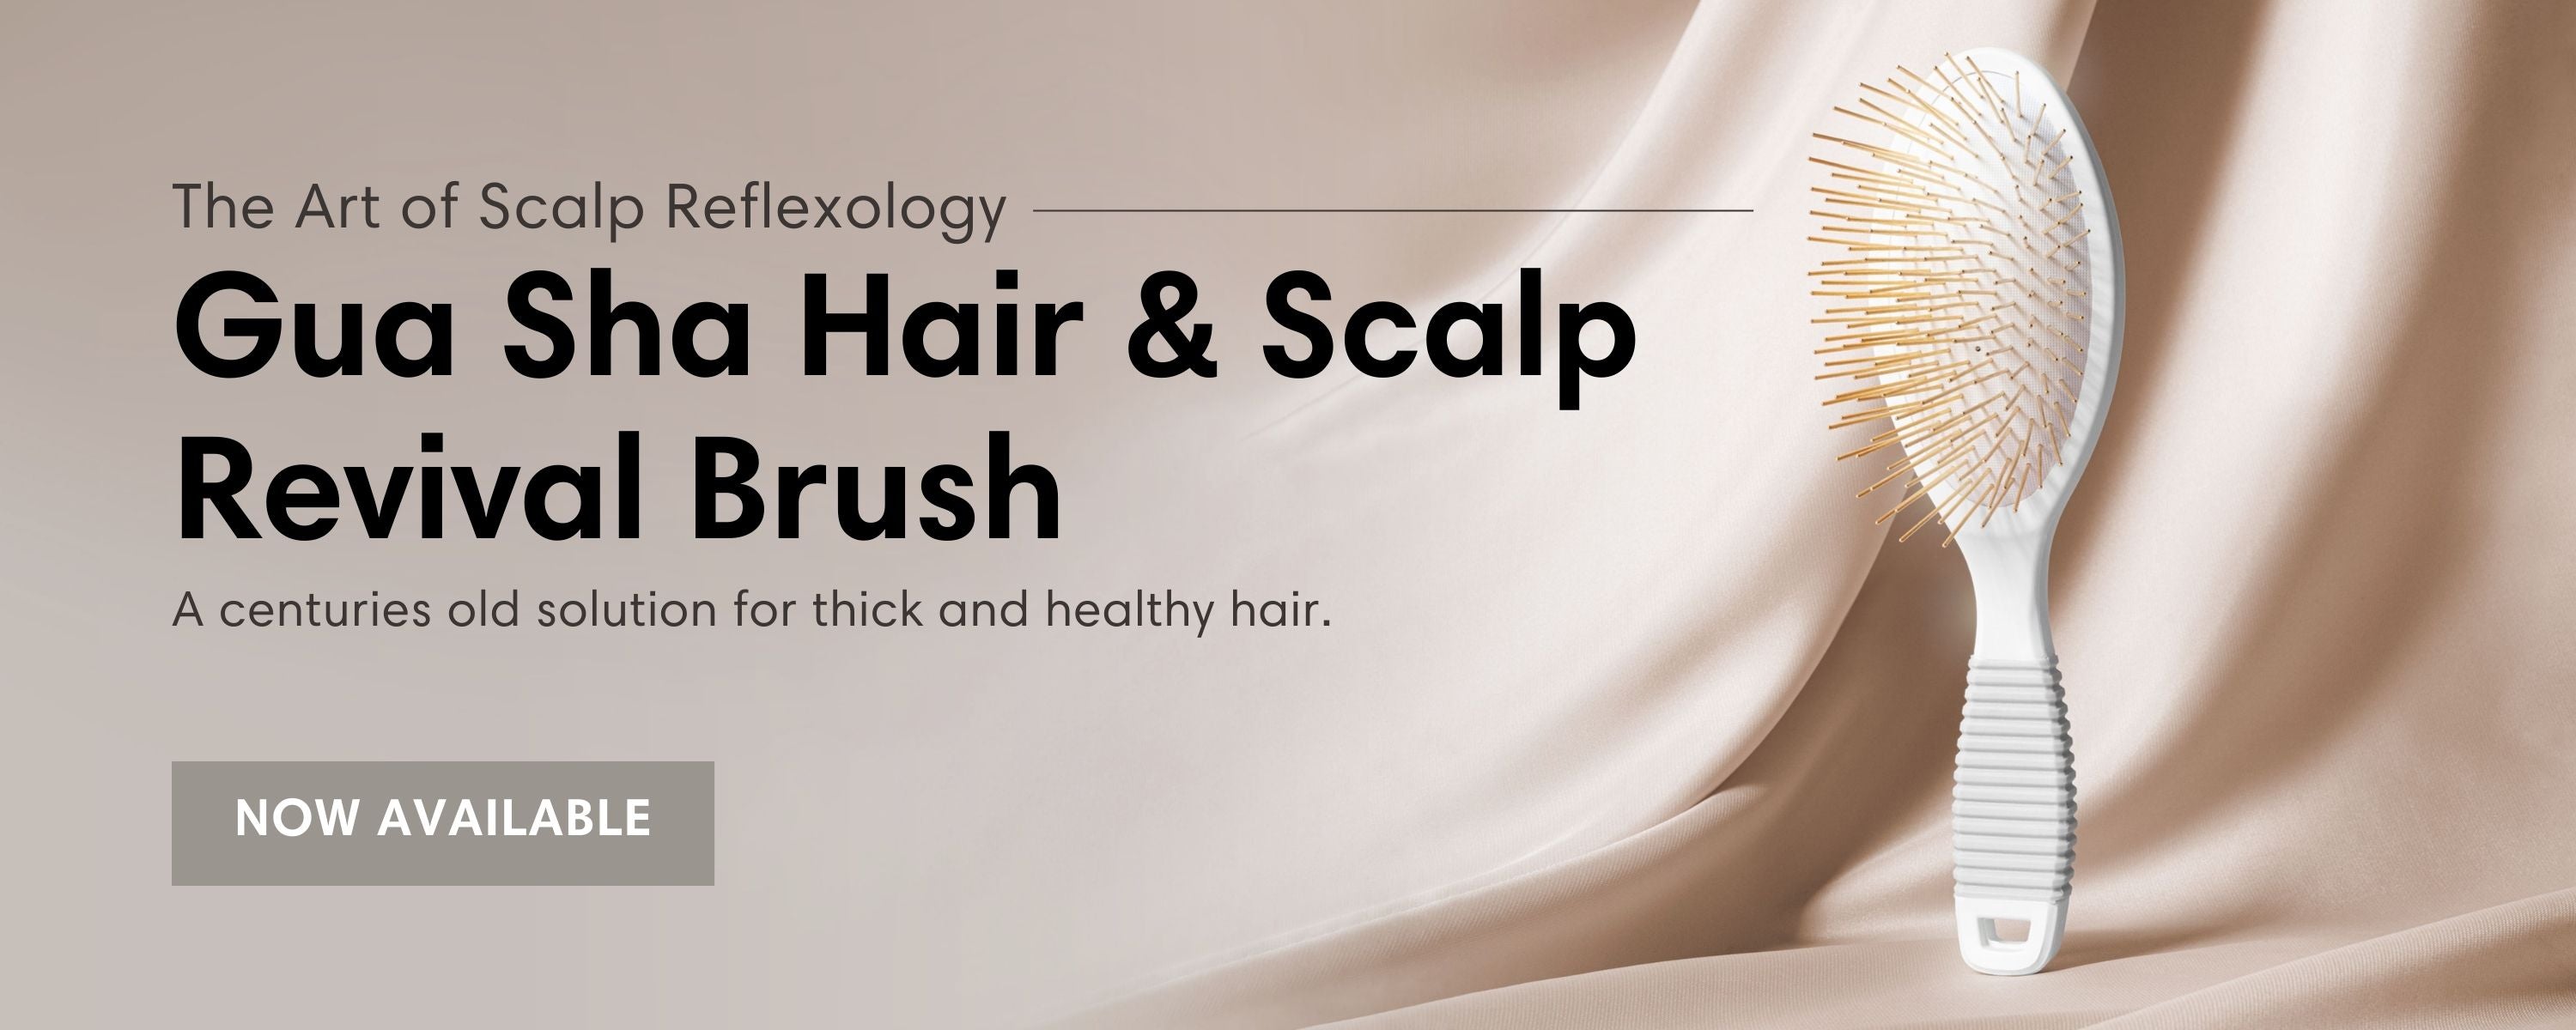 Gua Sha Hair & Scalp Revival Brush Waitlist – Snow Fox Skincare